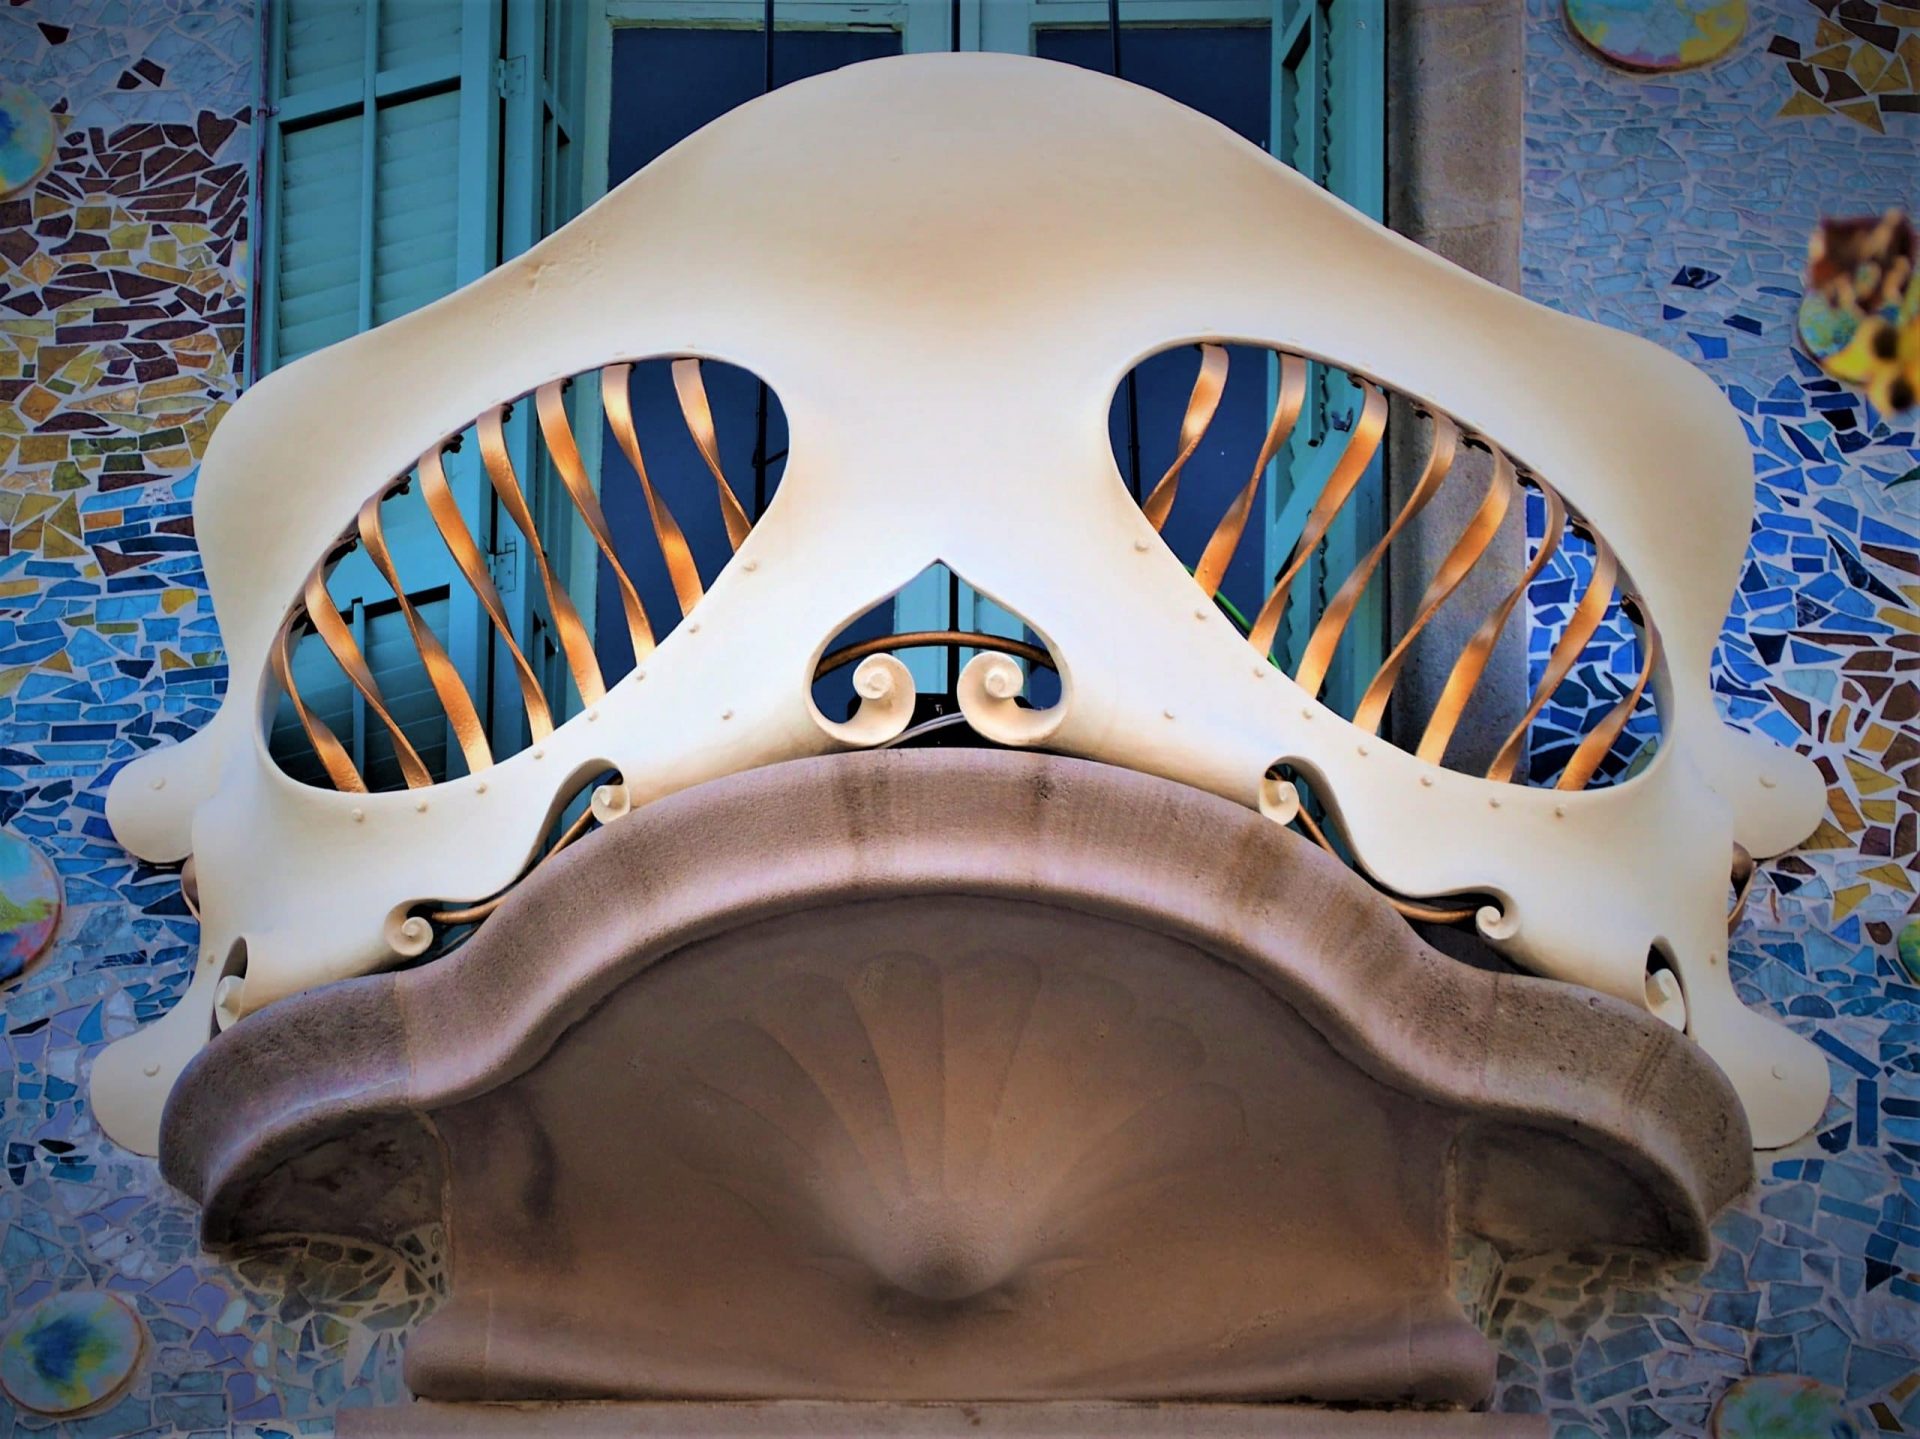 Balcon blanc de la maison Batllo de Gaudí sur Passeig de Gracia, Barcelone.